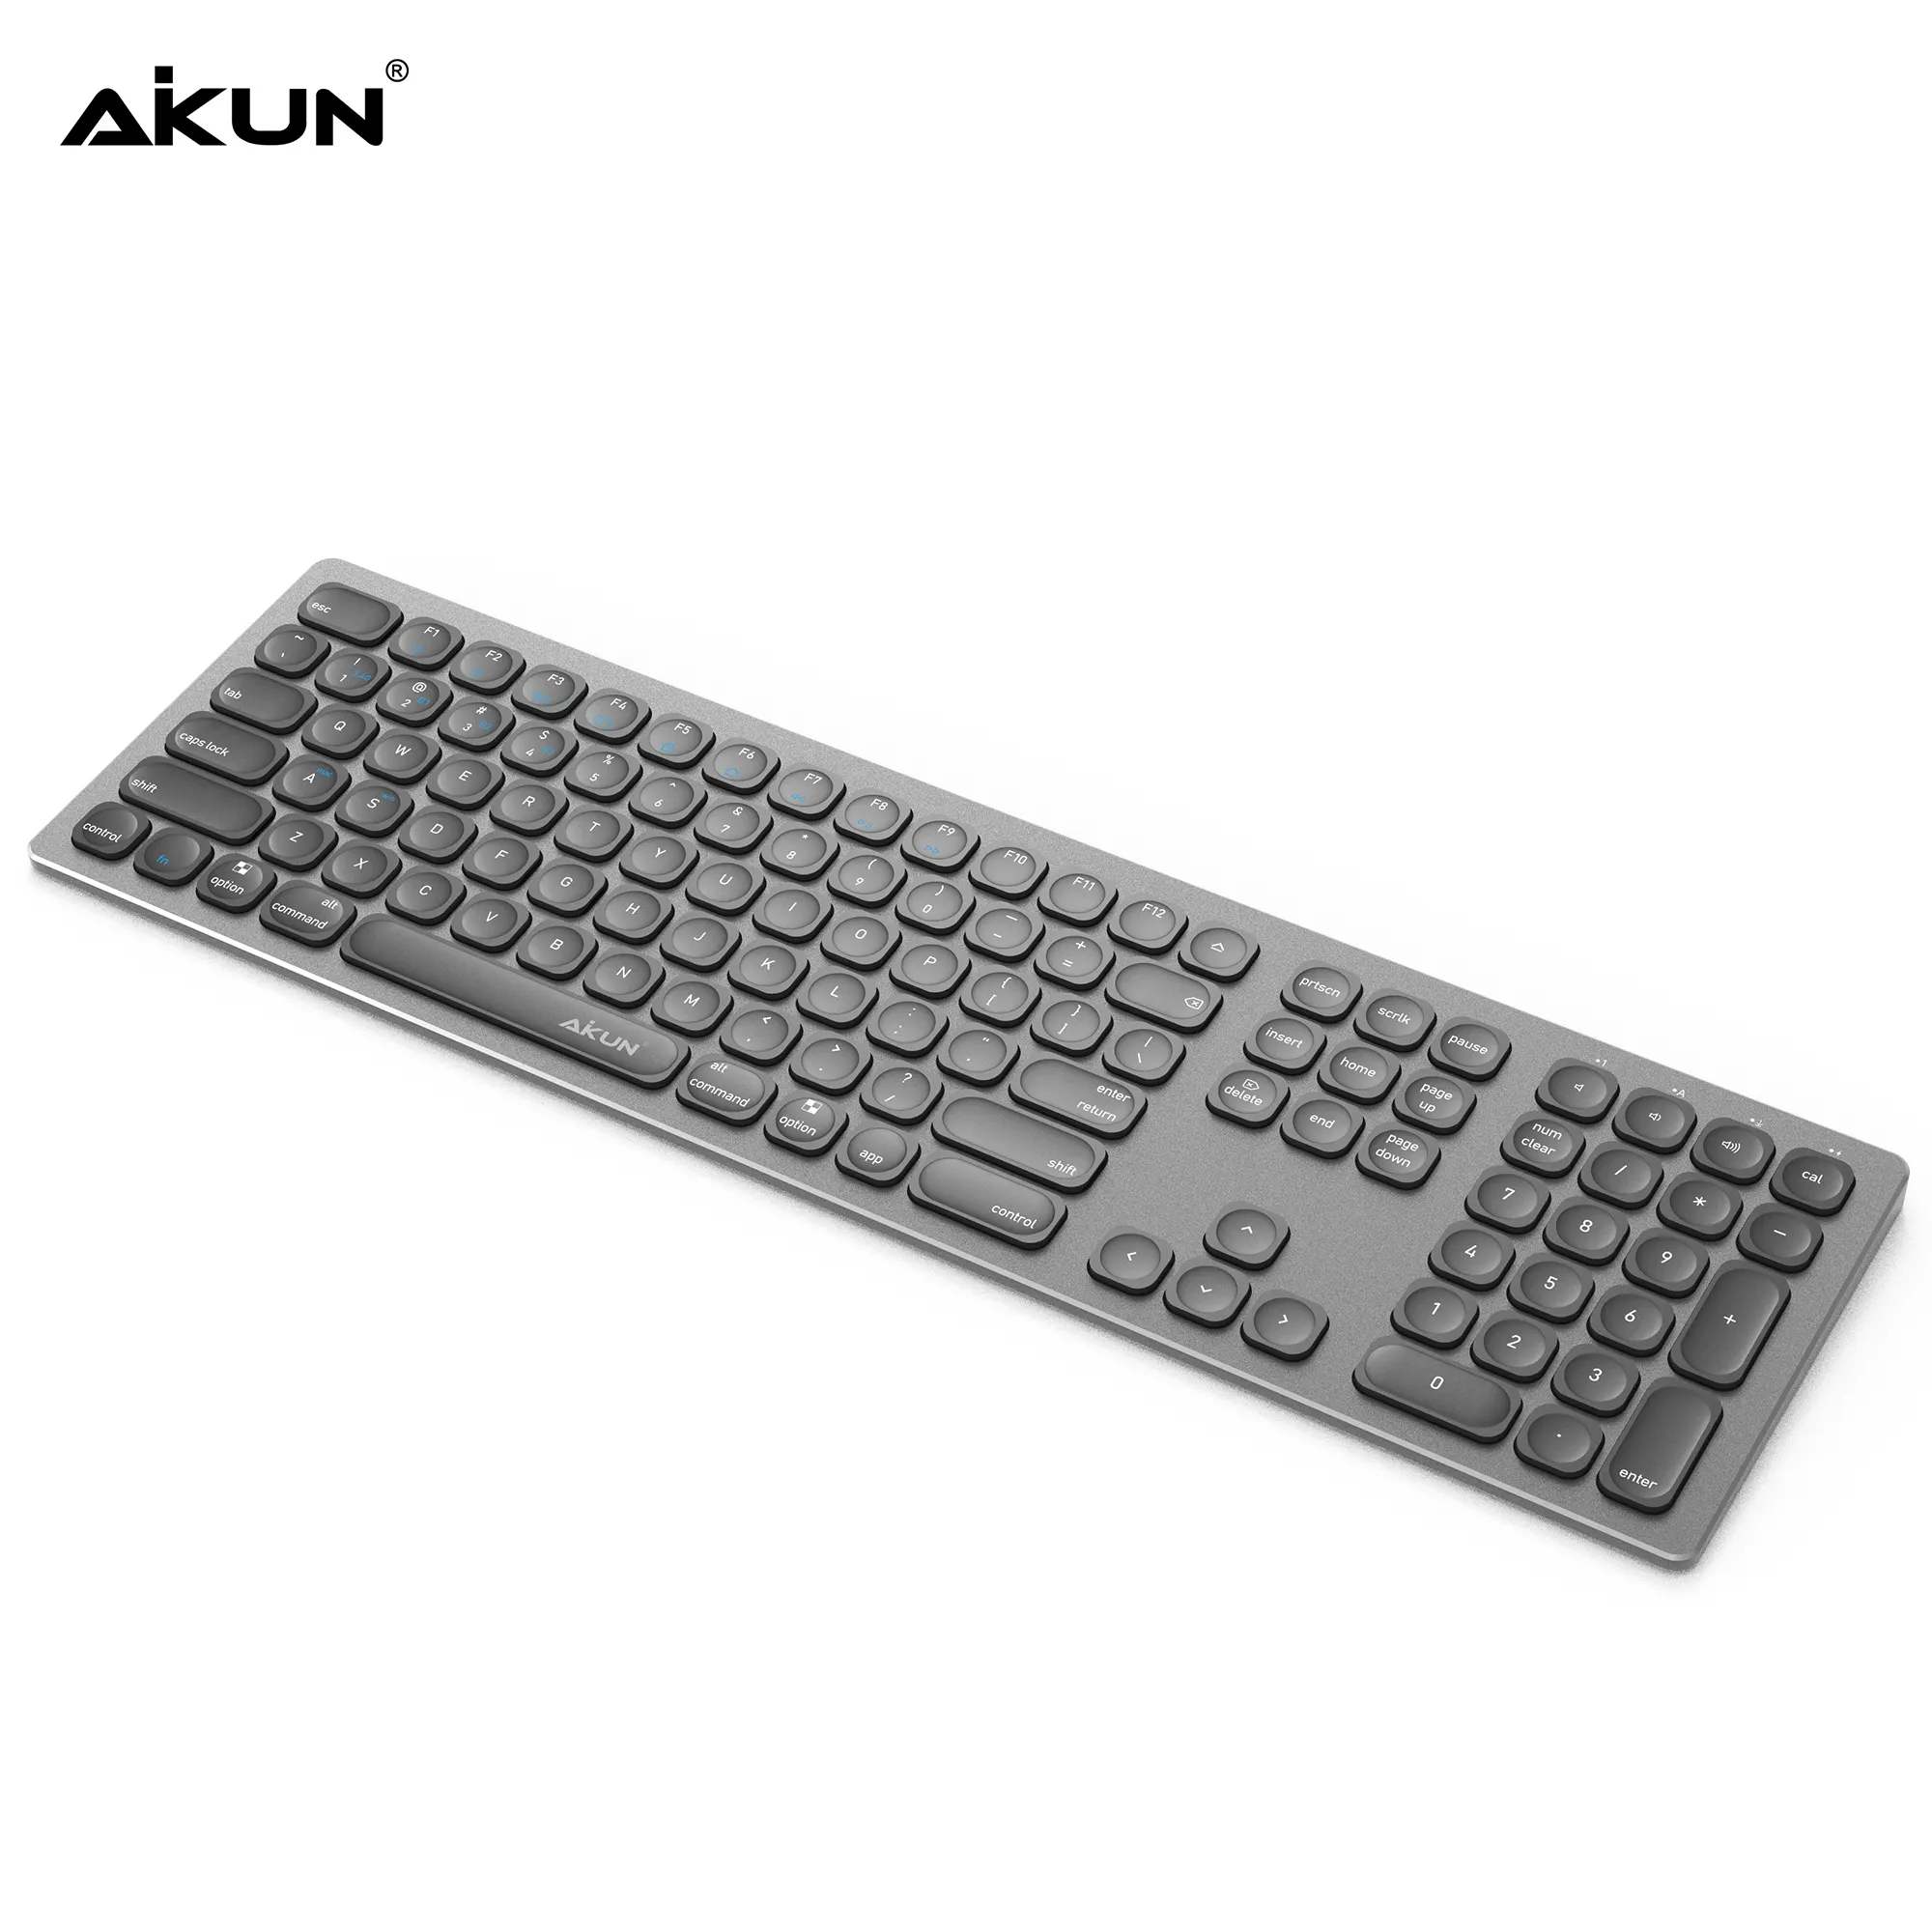 AIKUN Rechargeable BT/ Wireless aluminium keyboard 106 Quiet Keys,13 Shortcuts, Numeric Keypad,Auto Power Saving,Scissor Switch